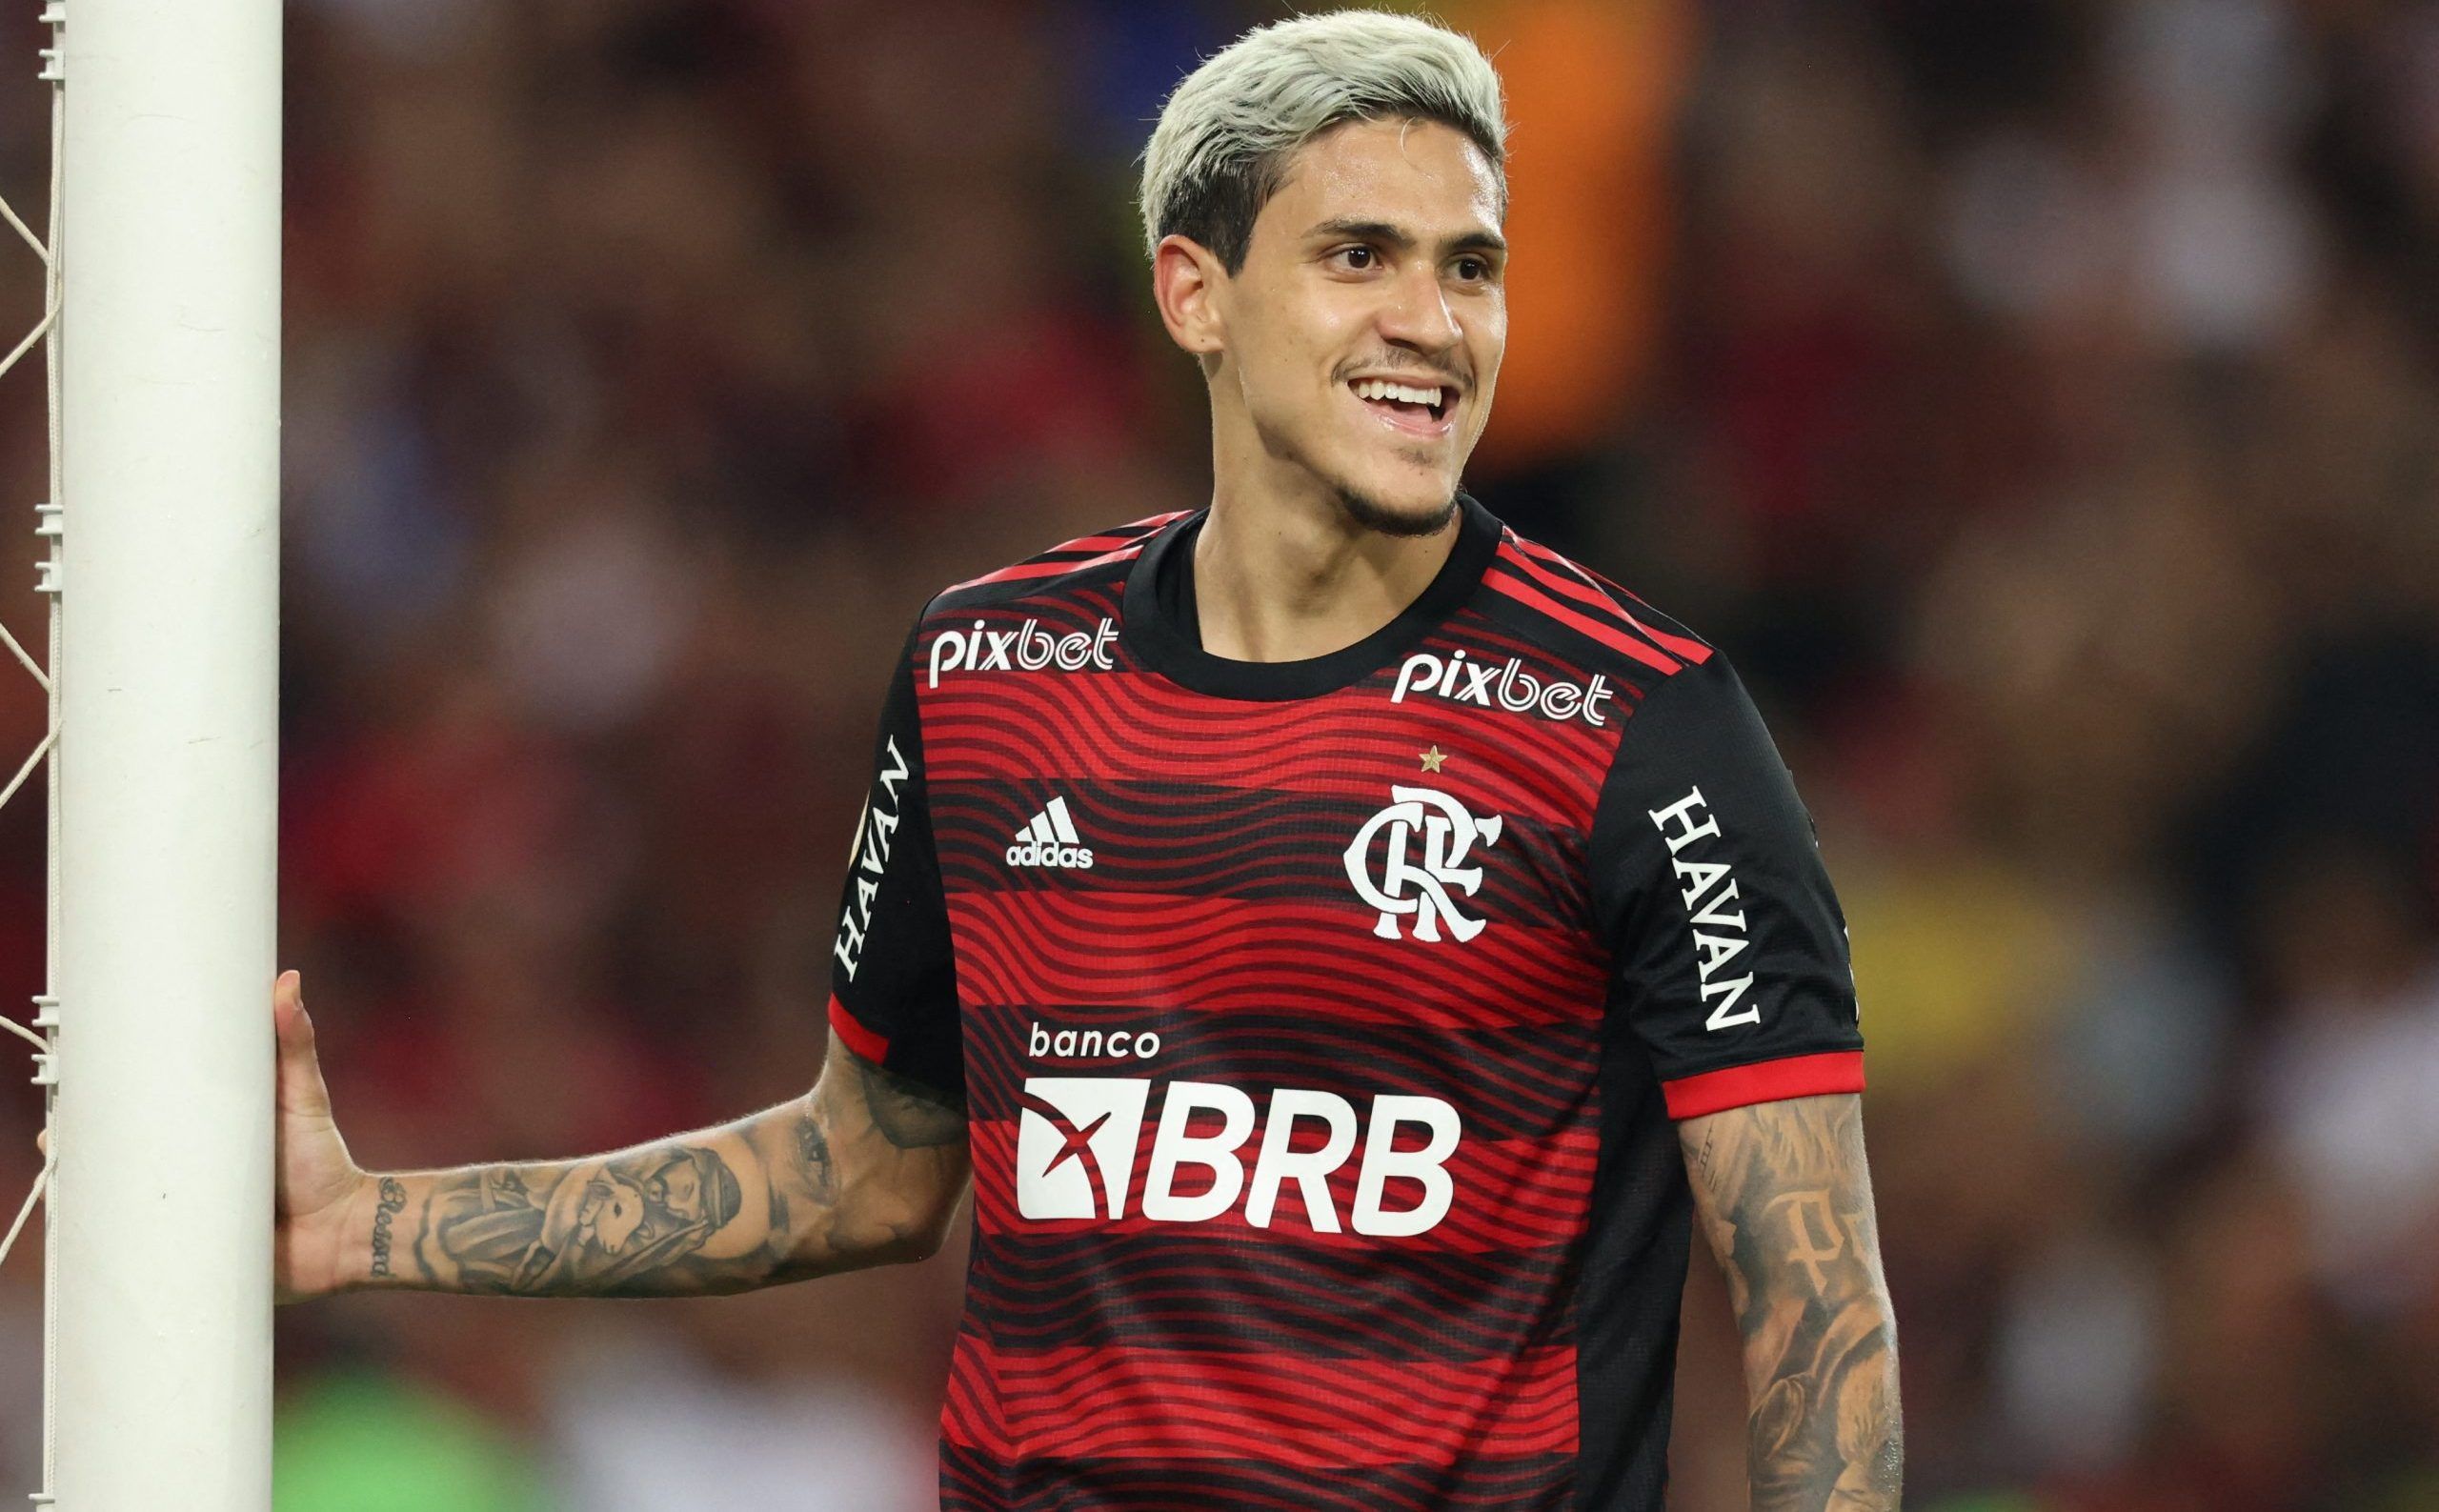 Pedro-Flamengo-Leeds-Orta-Marsch-Premier-League-transfer